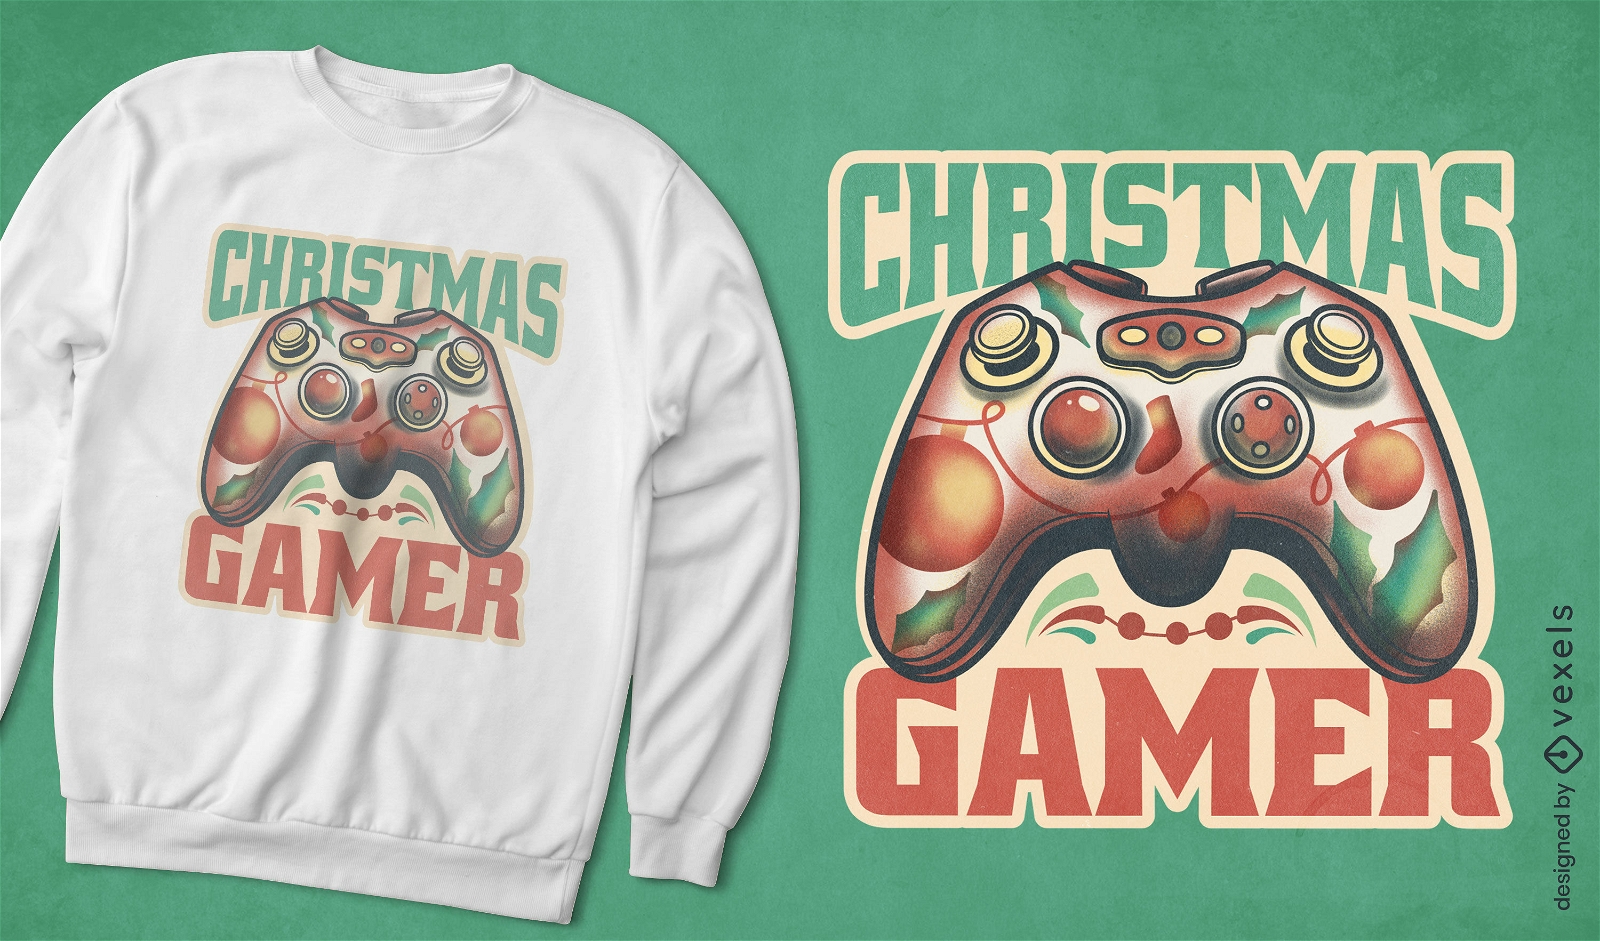 Christmas joystick for gamers t-shirt design